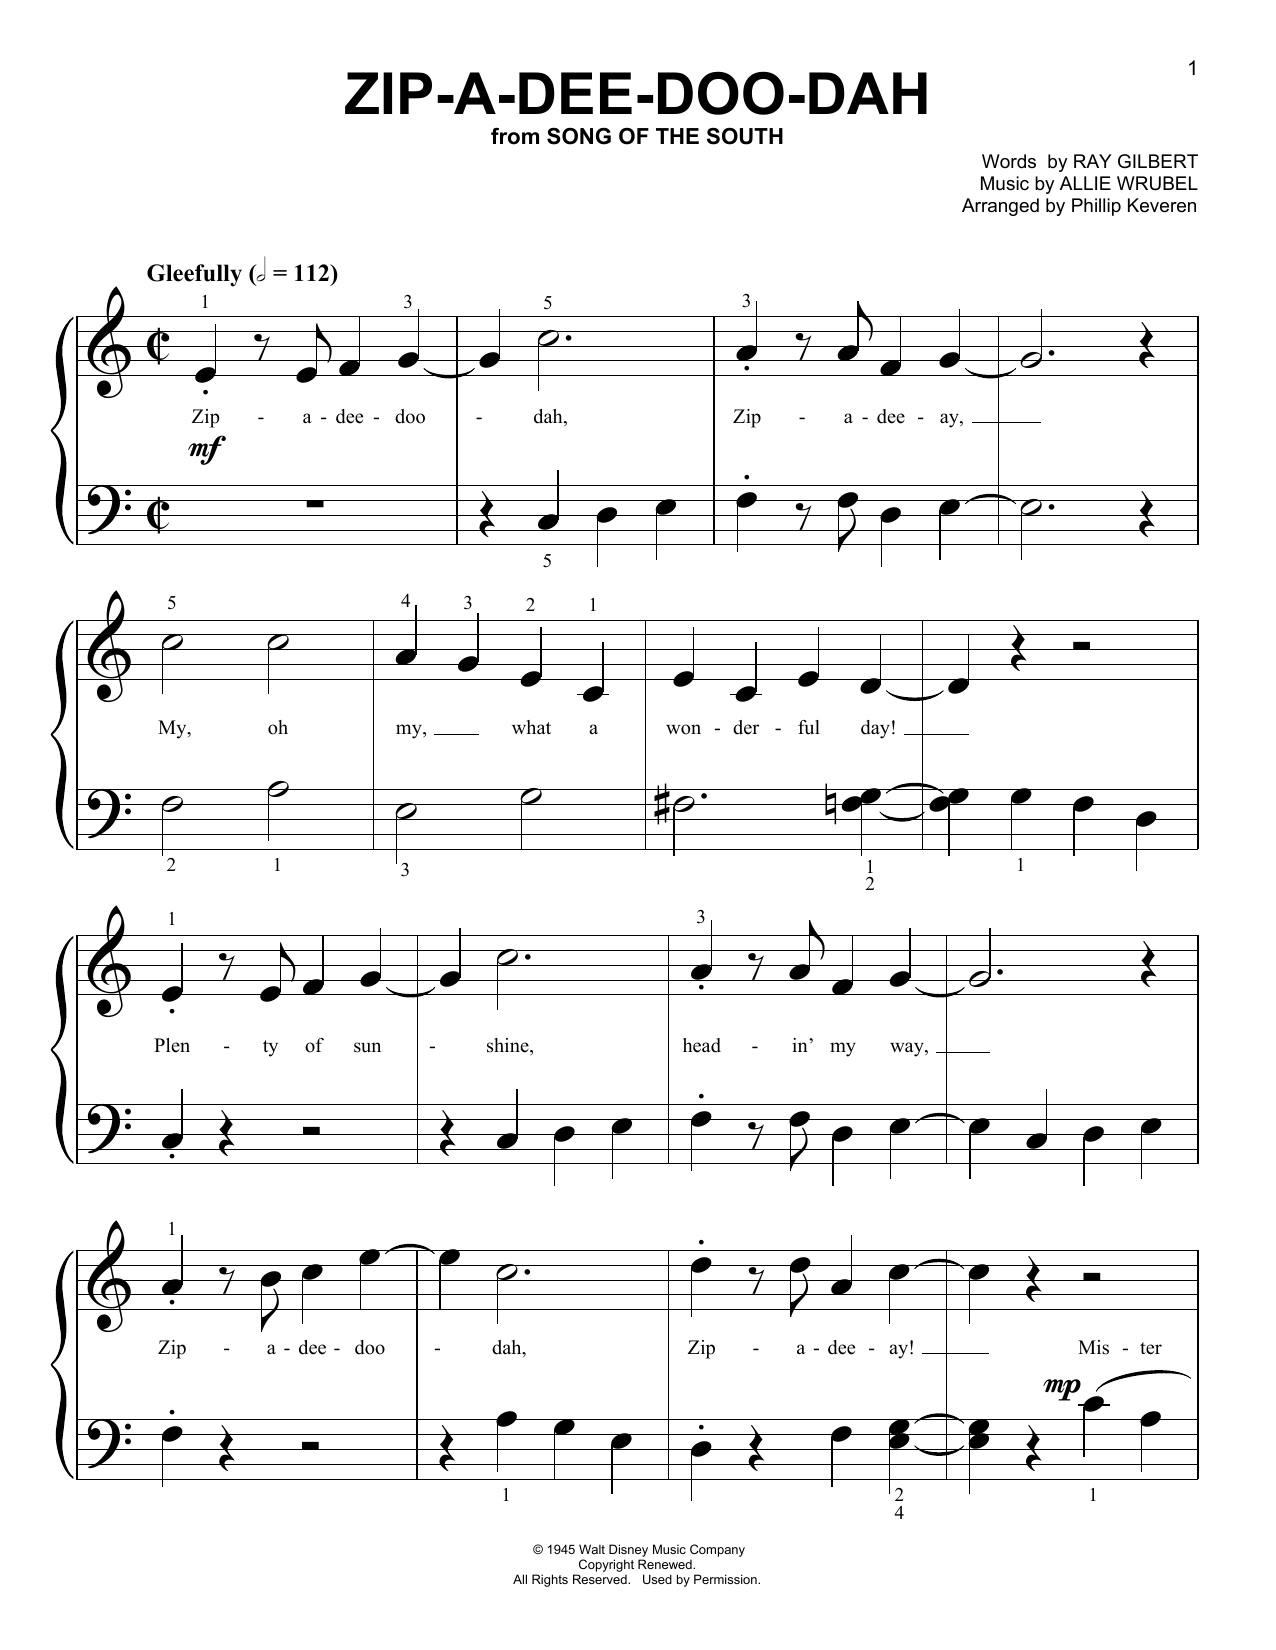 Ray Gilbert Zip-A-Dee-Doo-Dah Sheet Music Notes & Chords for Piano (Big Notes) - Download or Print PDF